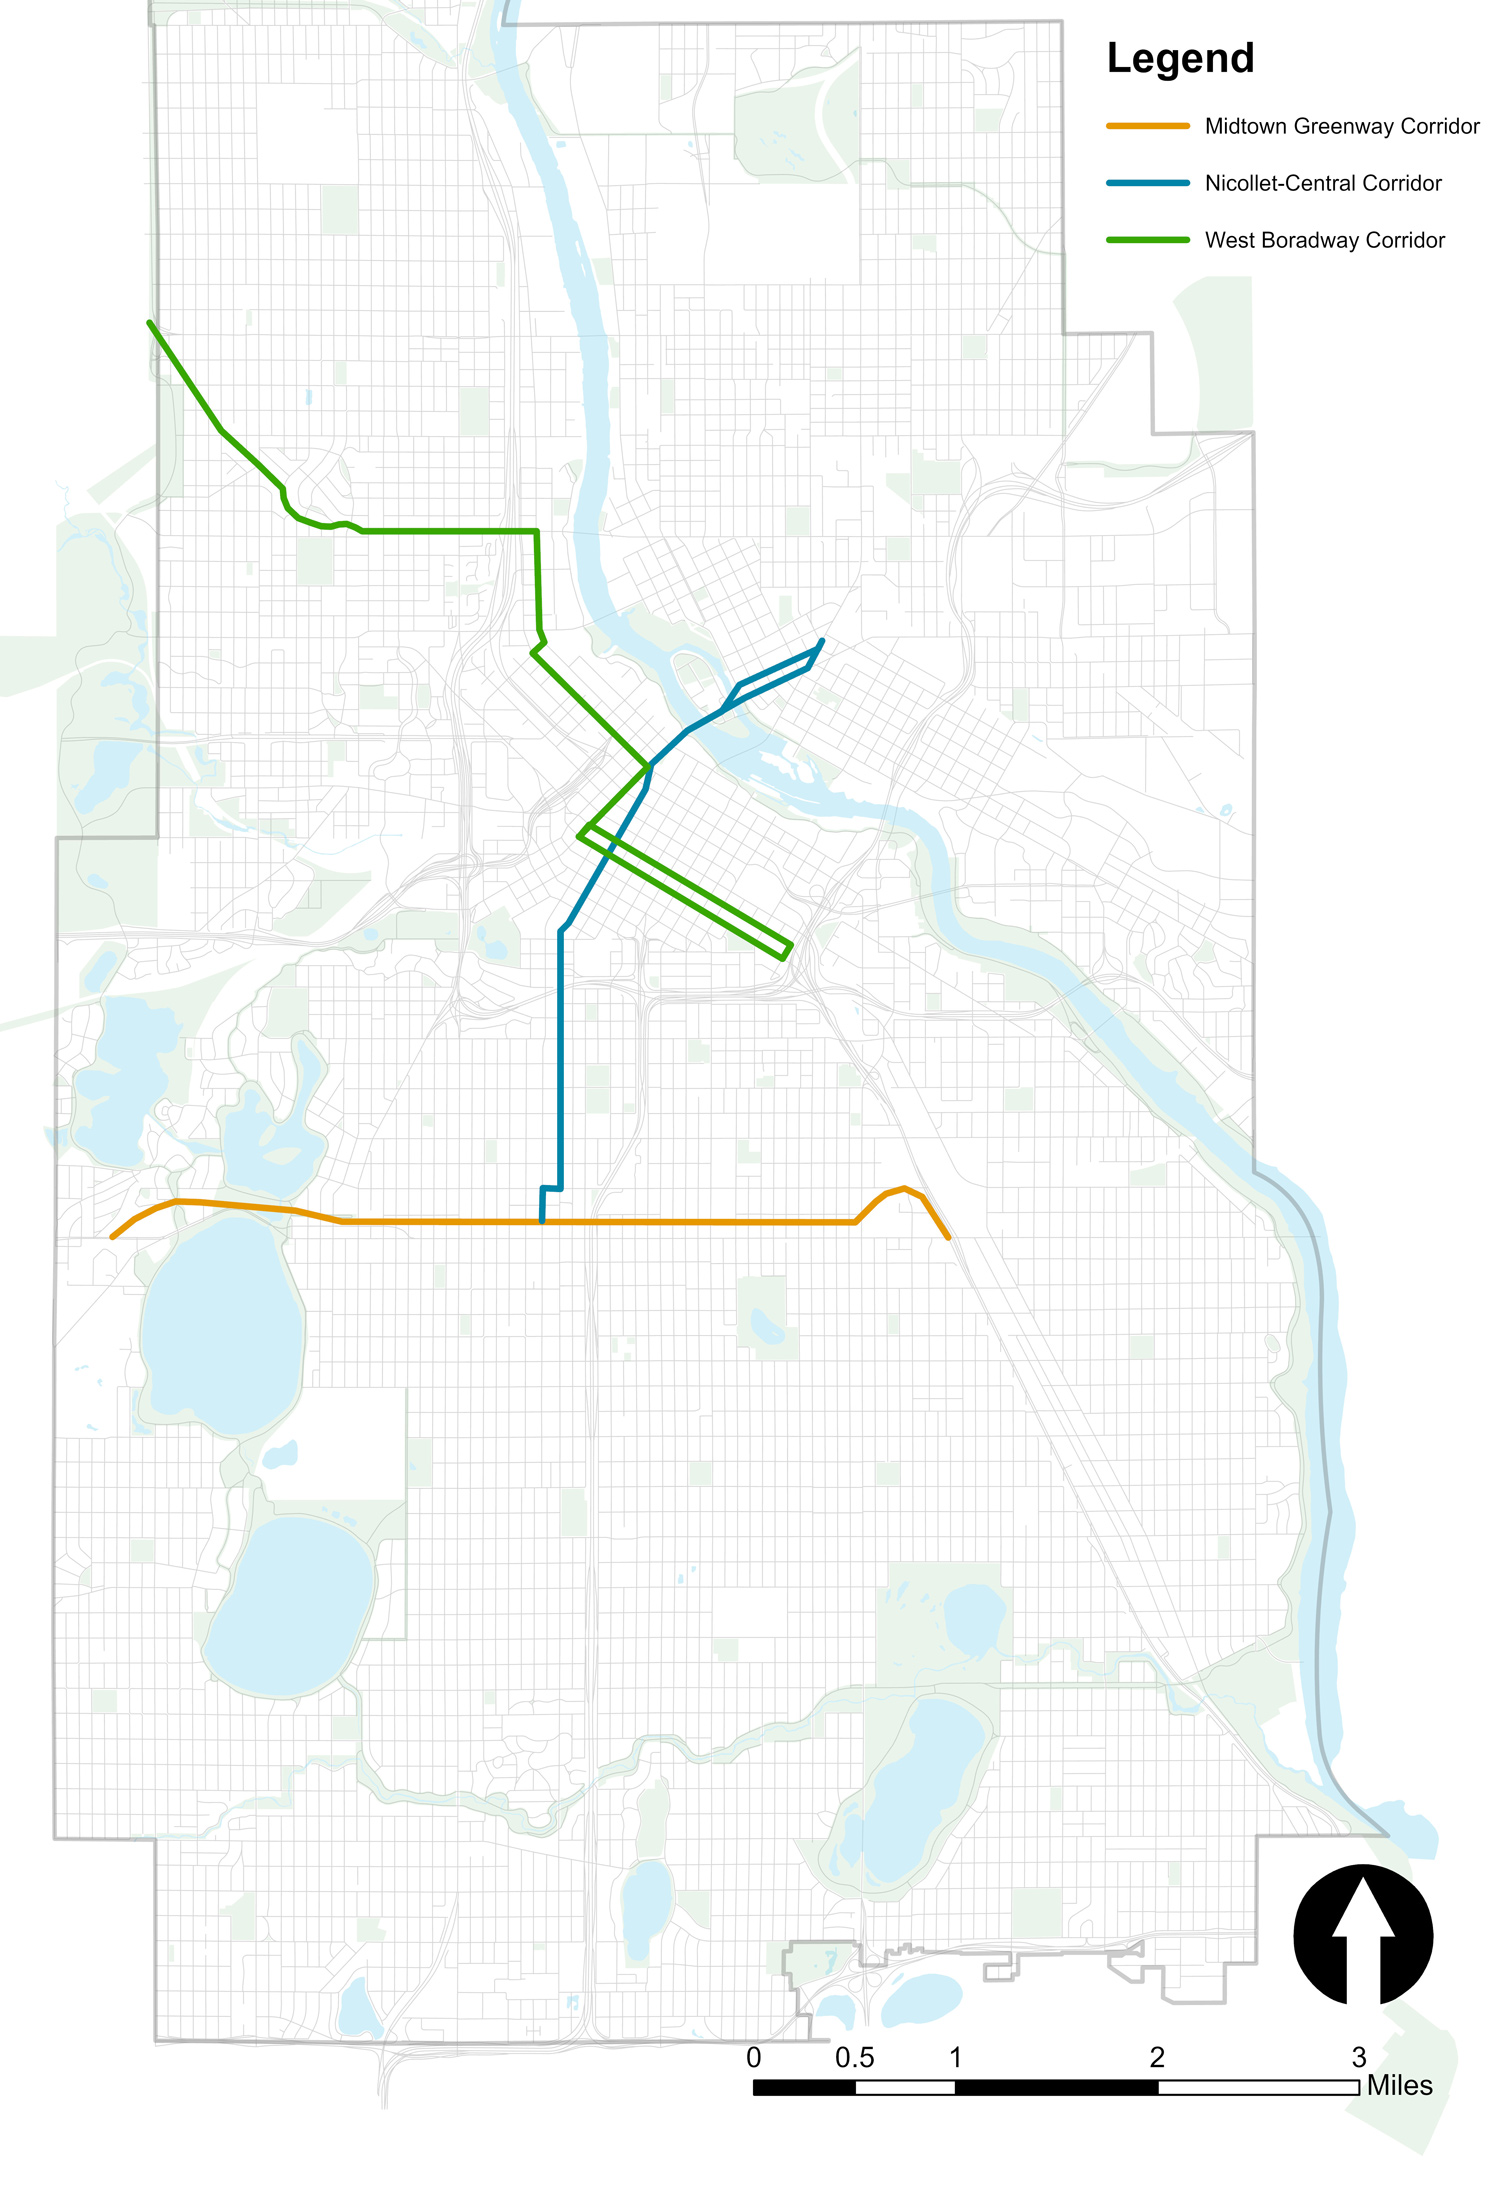 Neighborhood based transit corridors based on Locally Preferred Alternatives